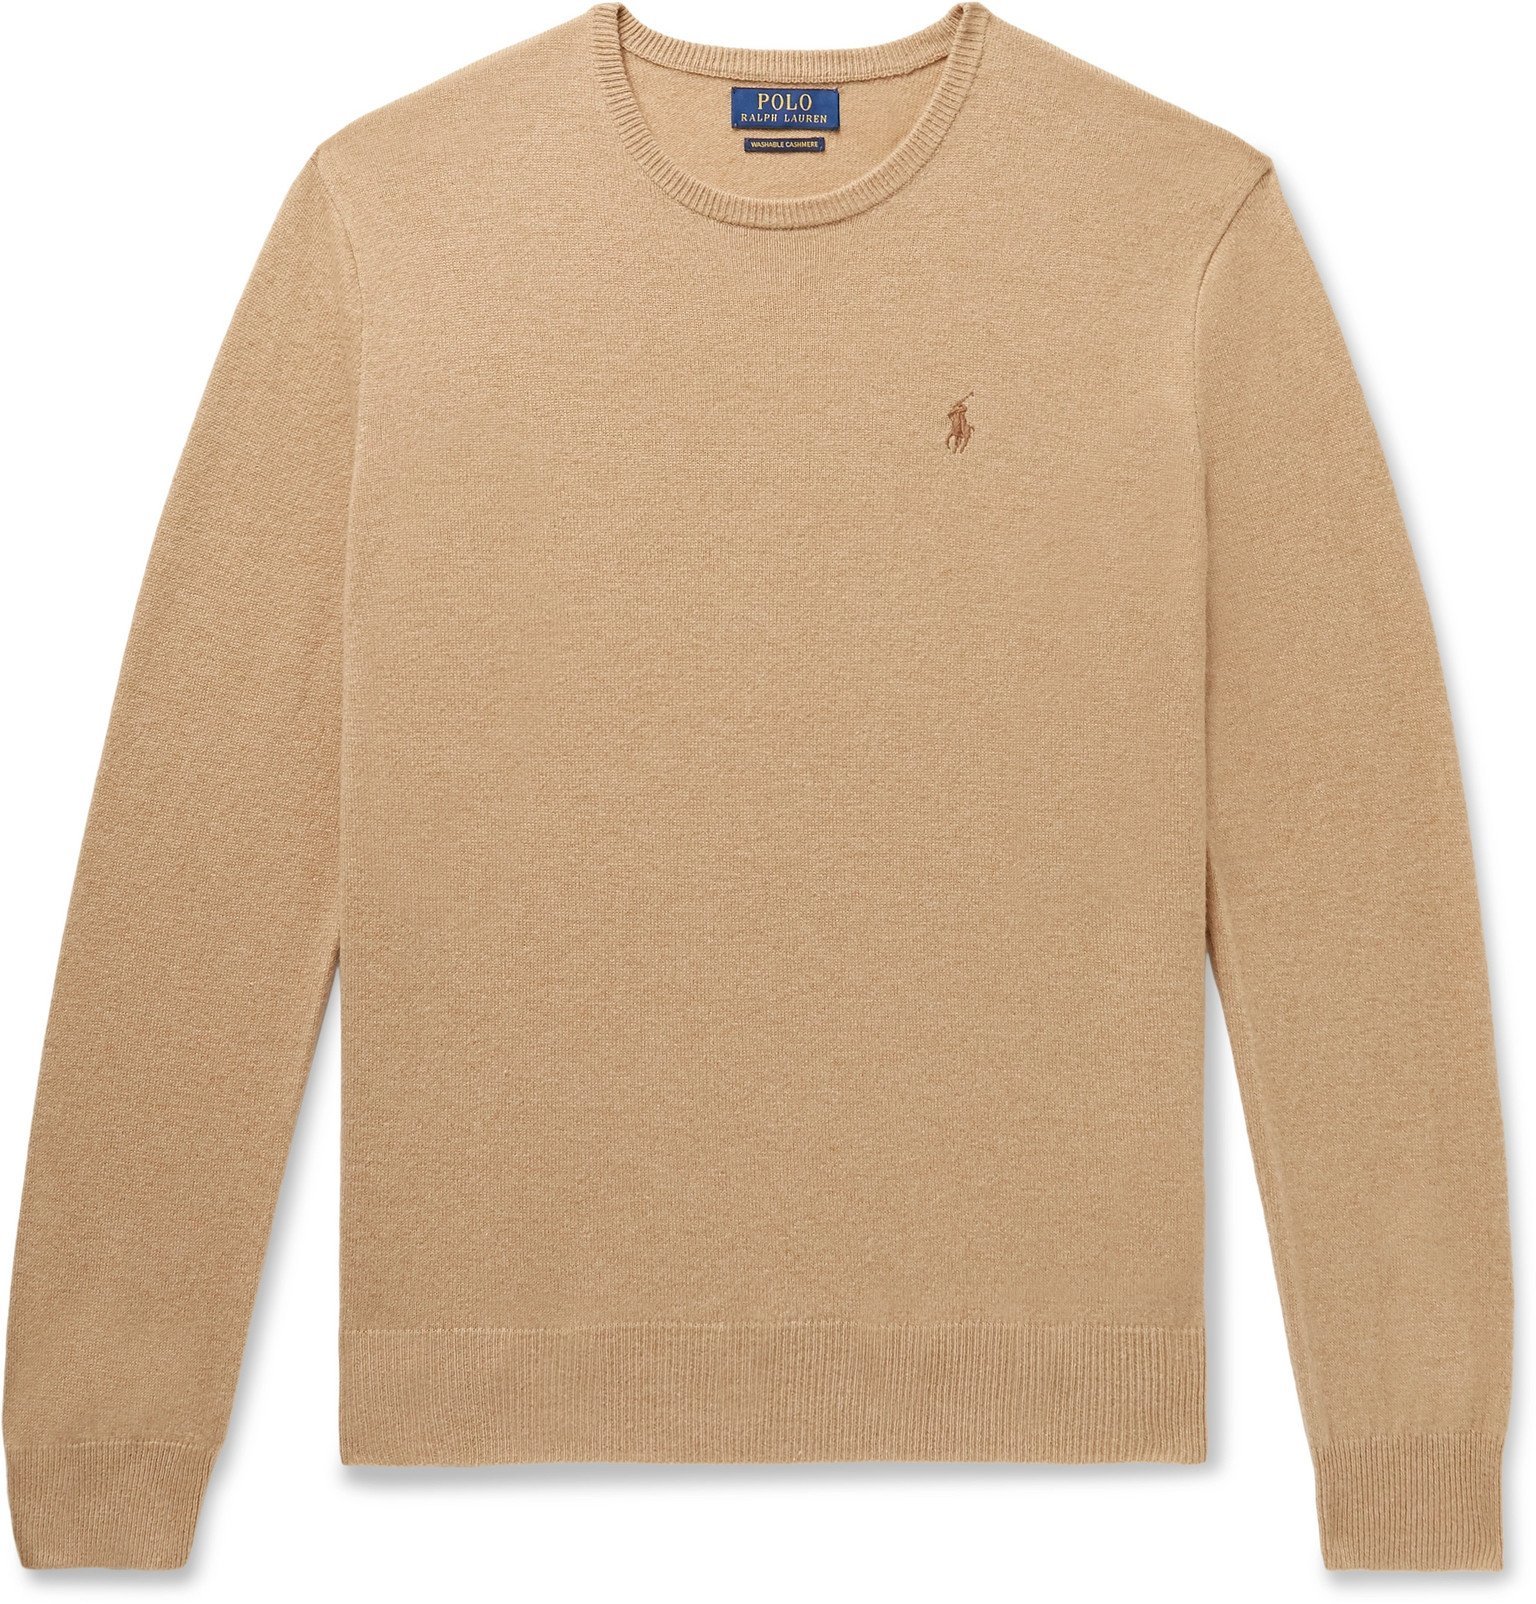 Polo Ralph Lauren - Mélange Cashmere Sweater - Brown Polo Ralph Lauren